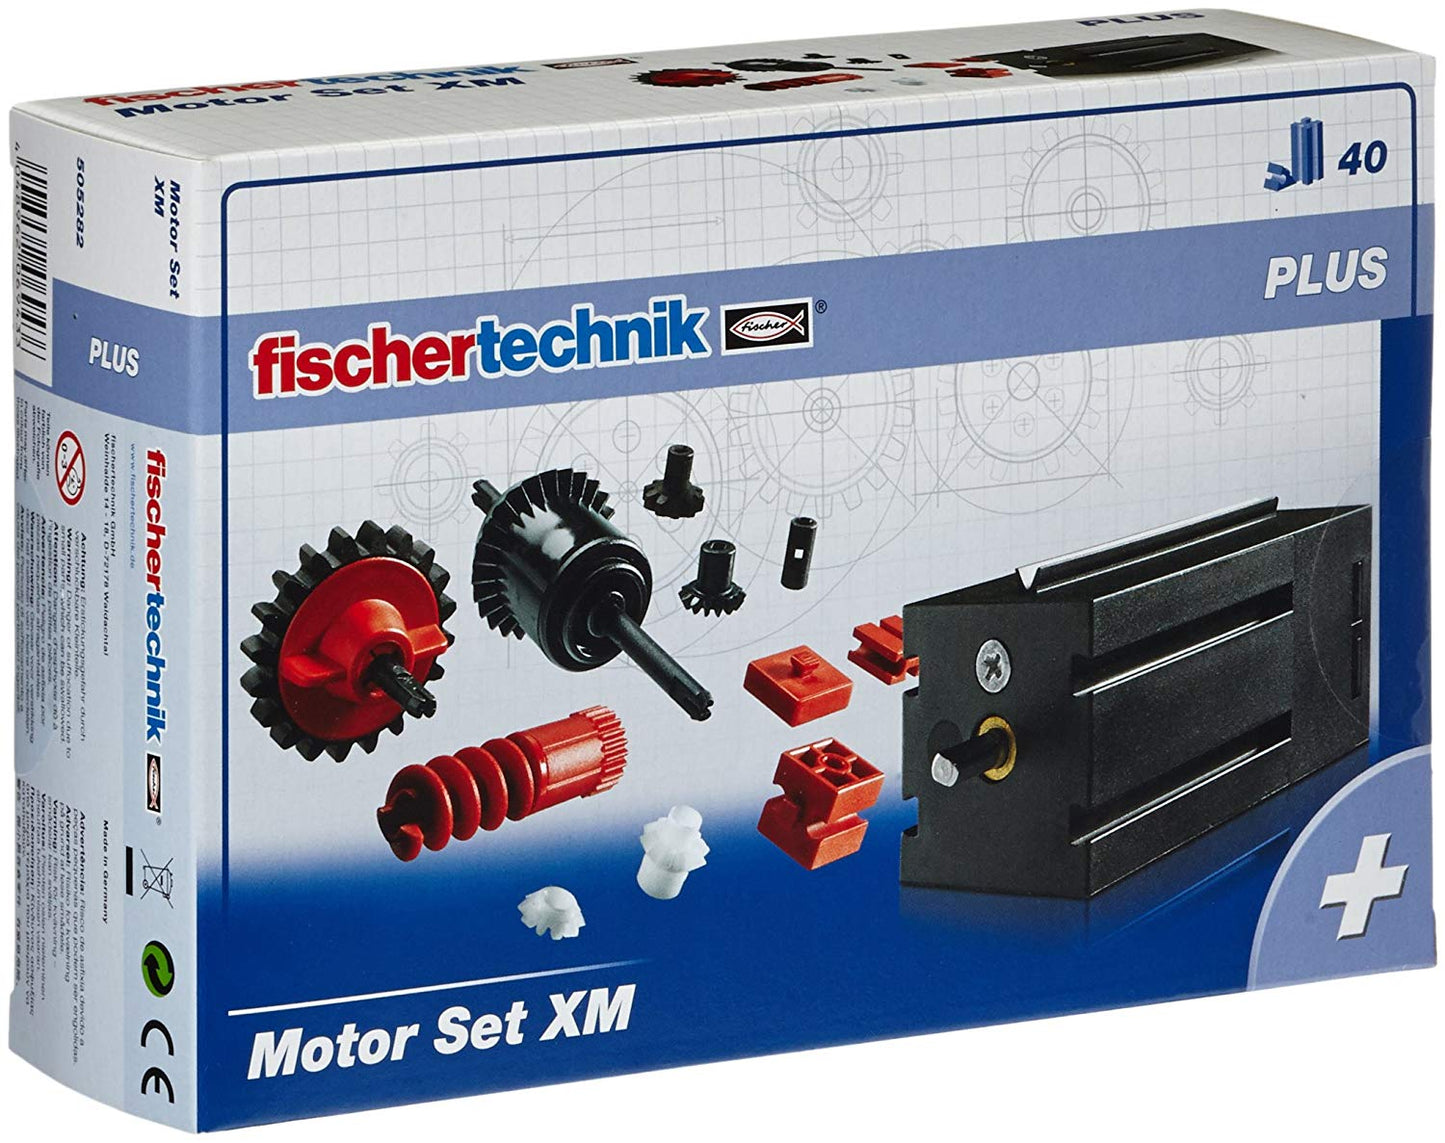 fischertechnik Motor Set XM Accessory Set